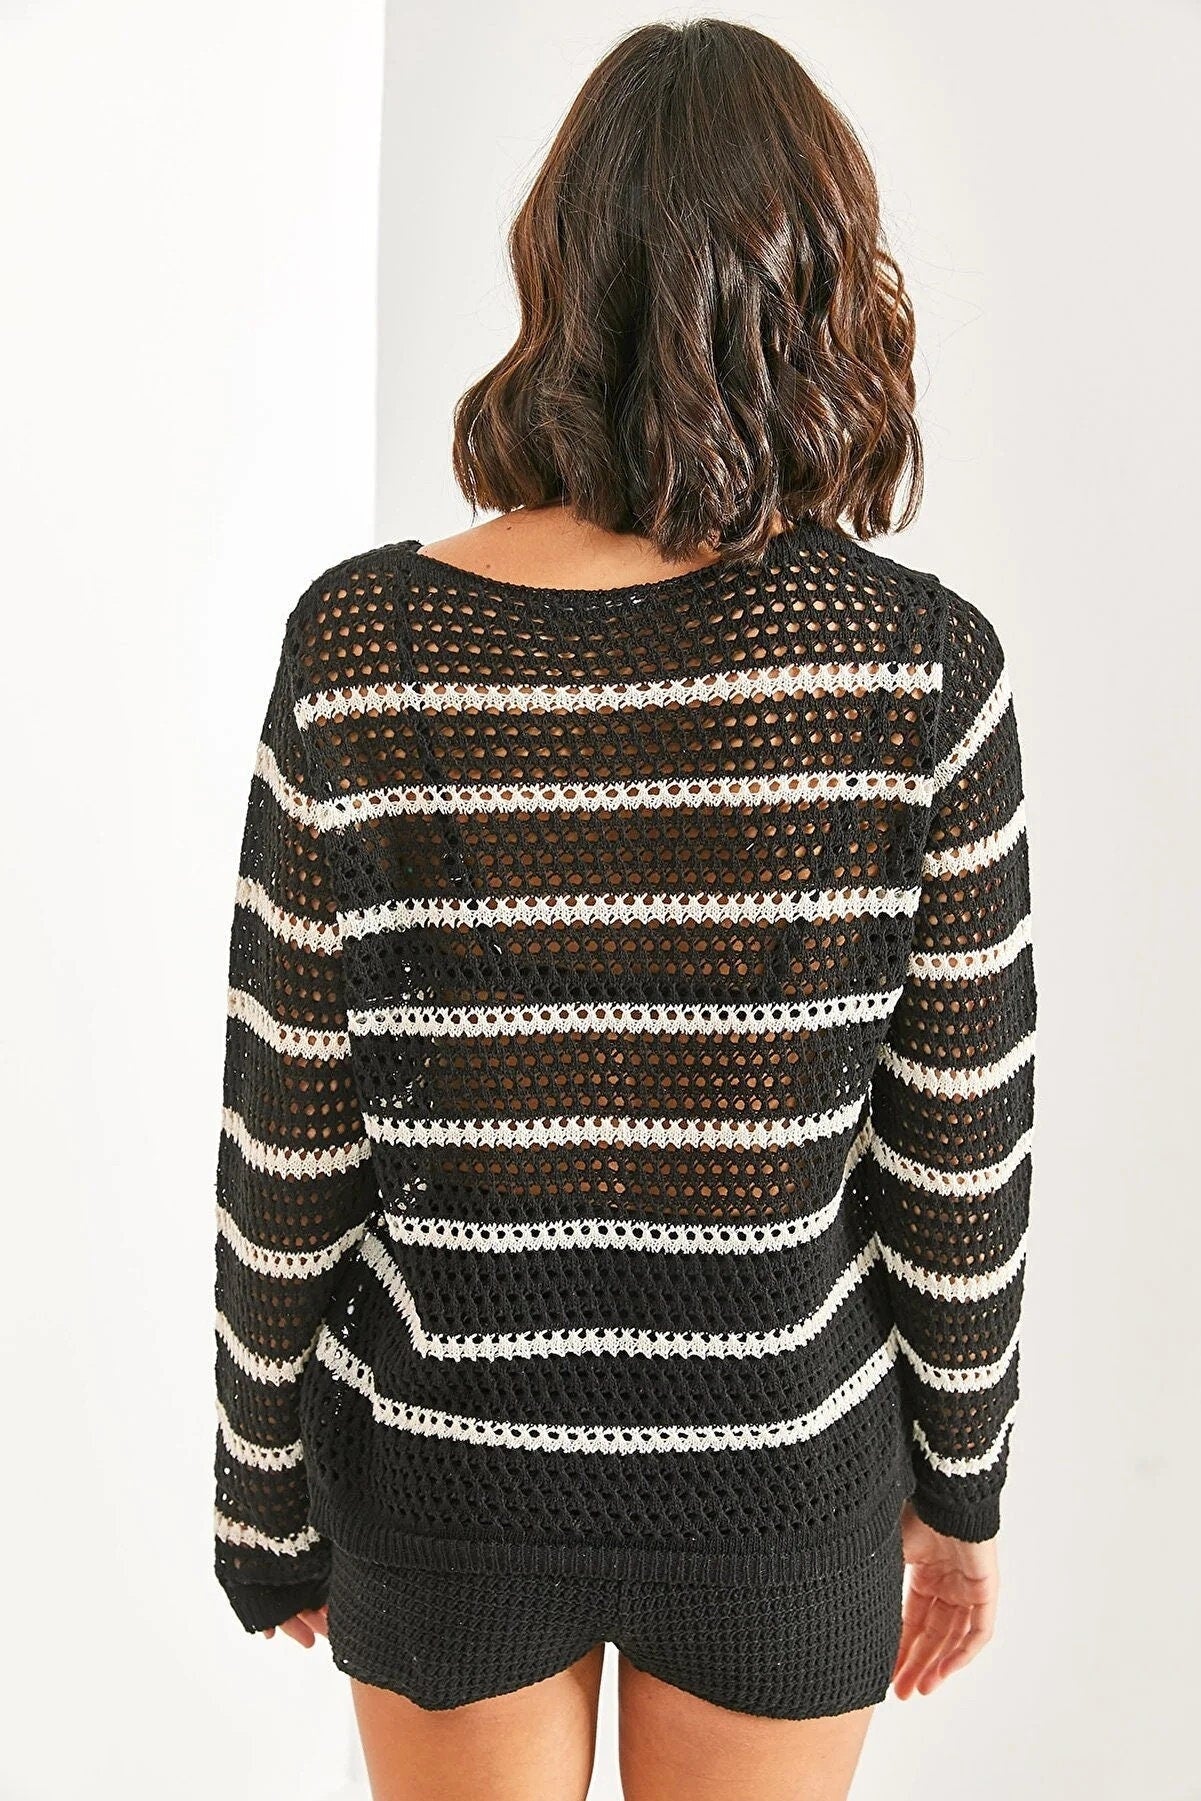 Black Crochet Long Sleeve Knitted Sweater